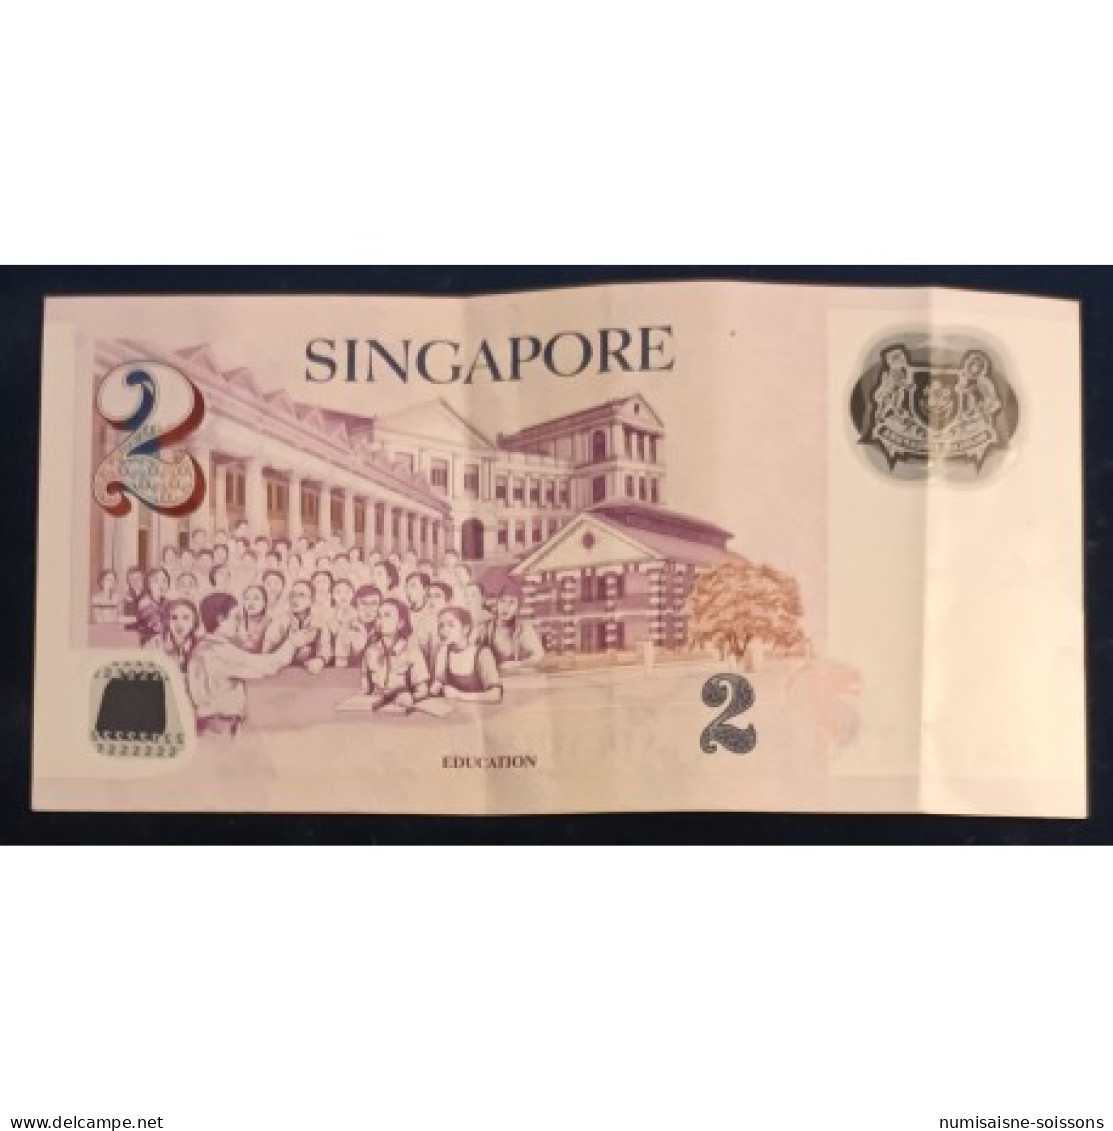 SINGAPOUR - PICK 46 A - 2 DOLLARS - 2005 - POLYMERE - SUP - Singapur